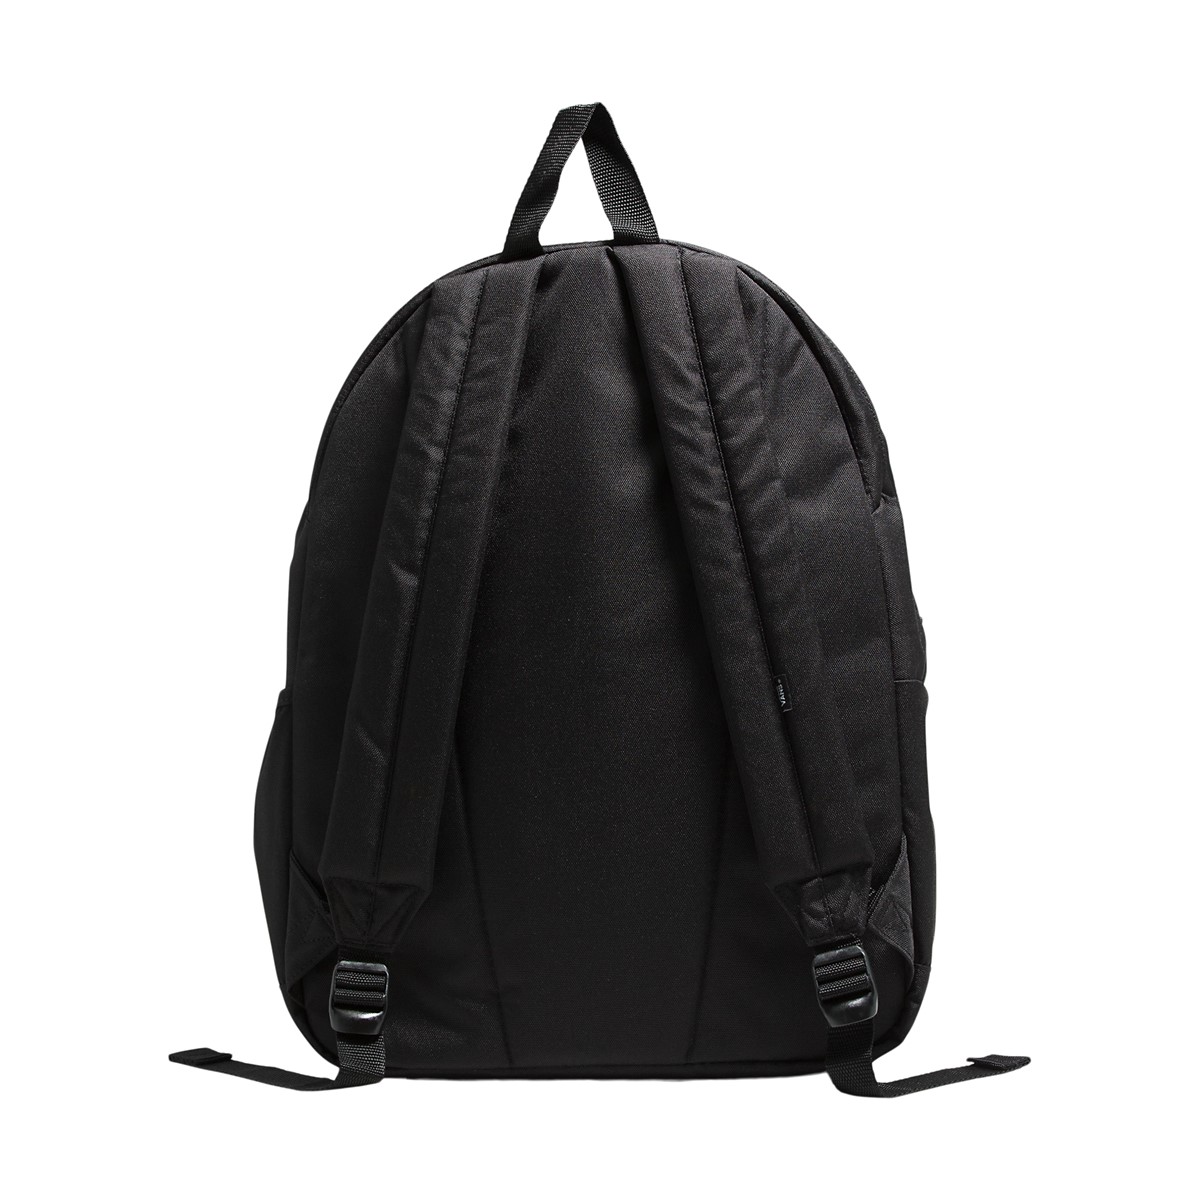 In Session Backpack in Black | Little Burgundy